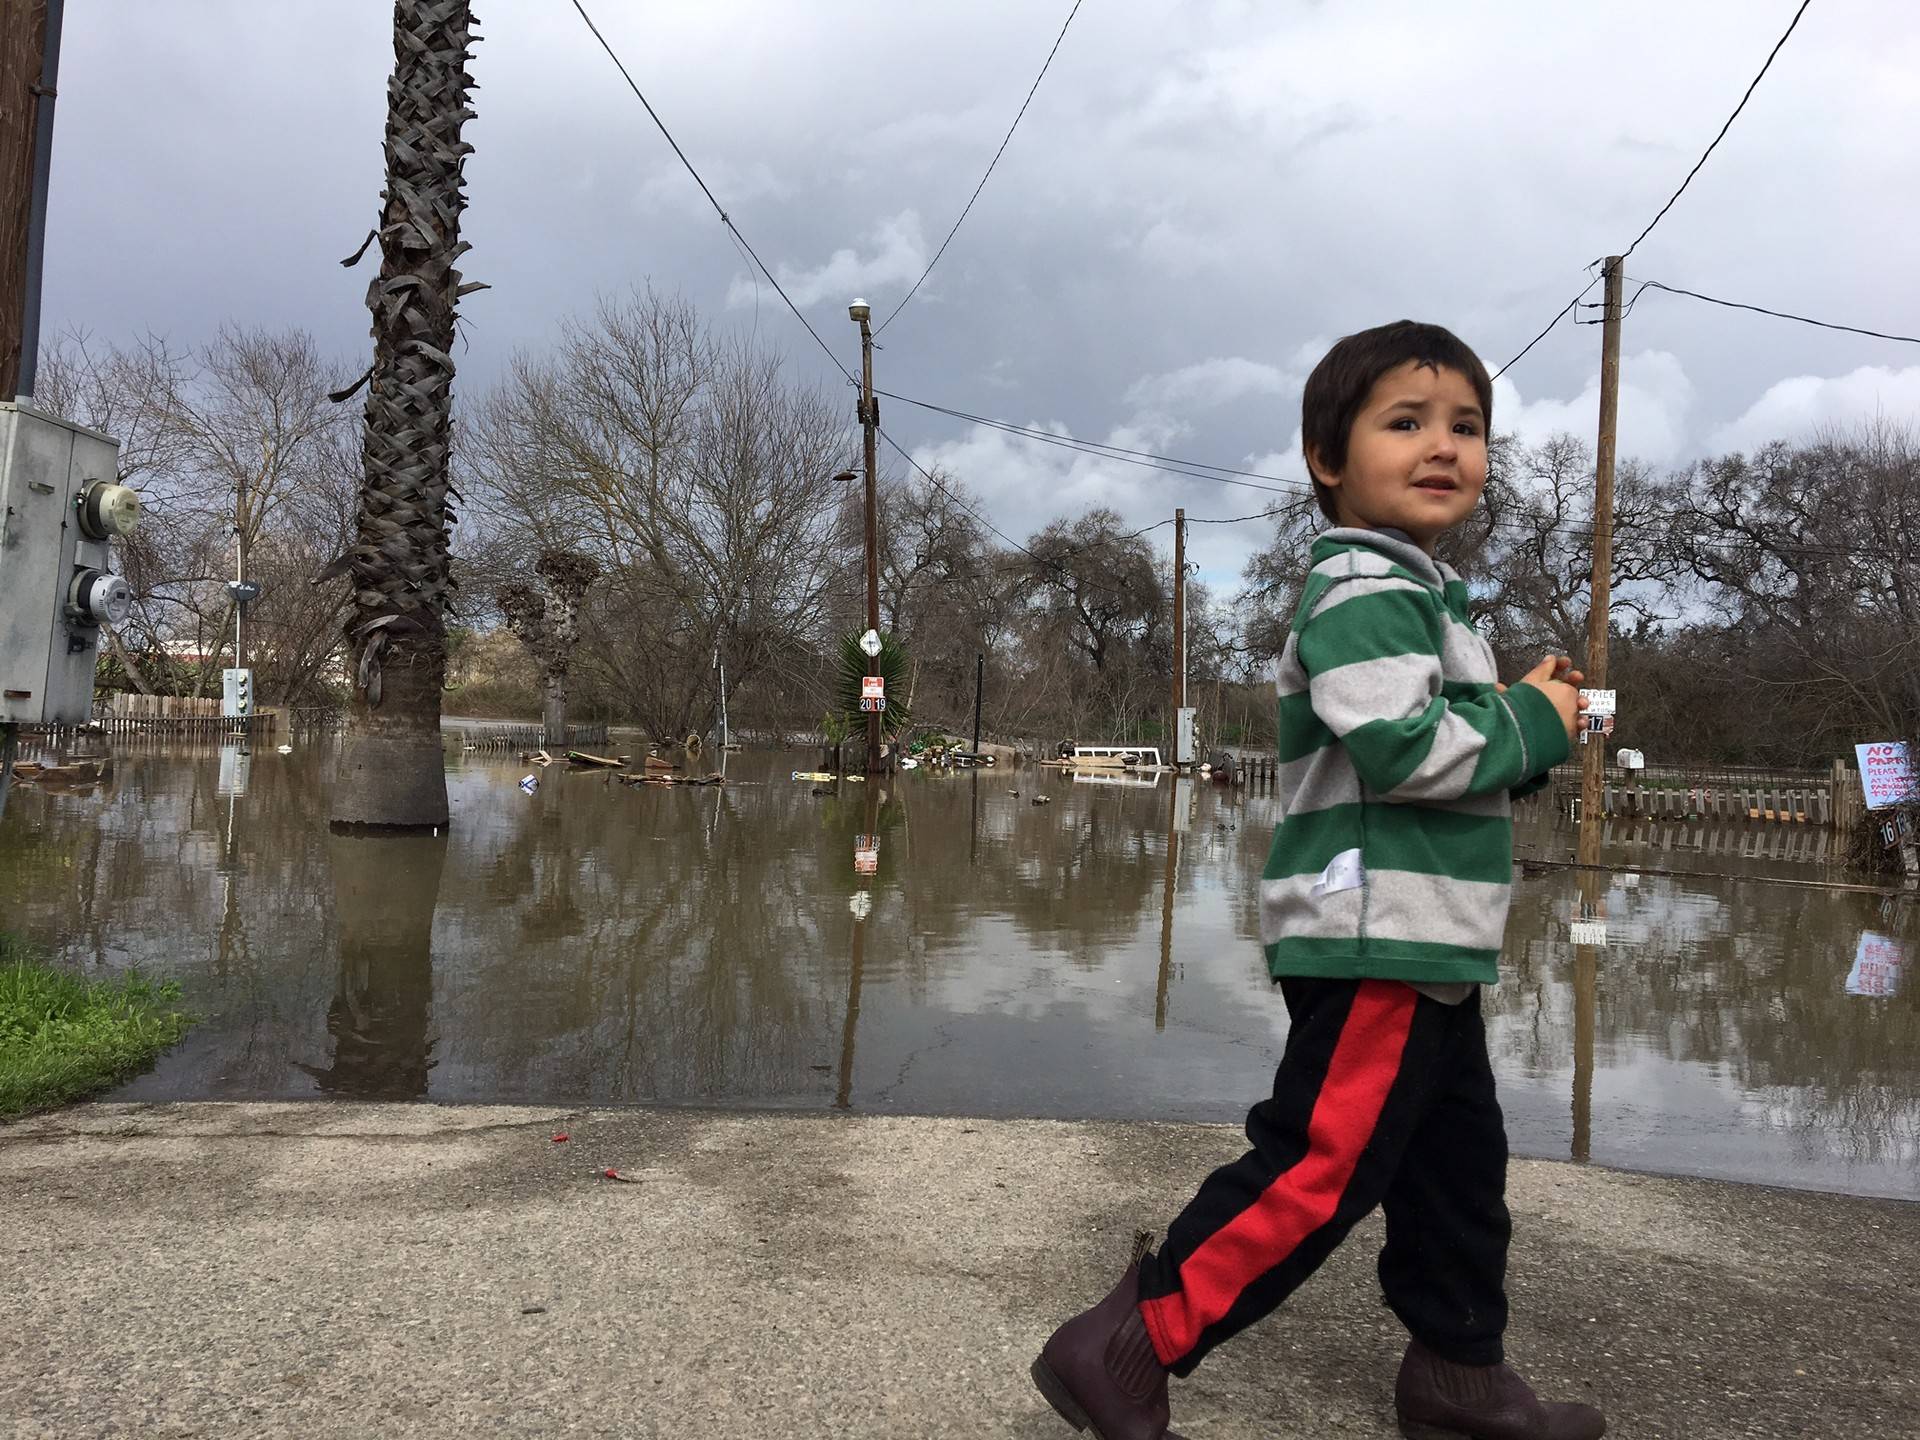 A child walks alongside the flooded Terrace Trailer Park in Modesto on Feb. 21, 2017. Vanessa Rancaño/KQED